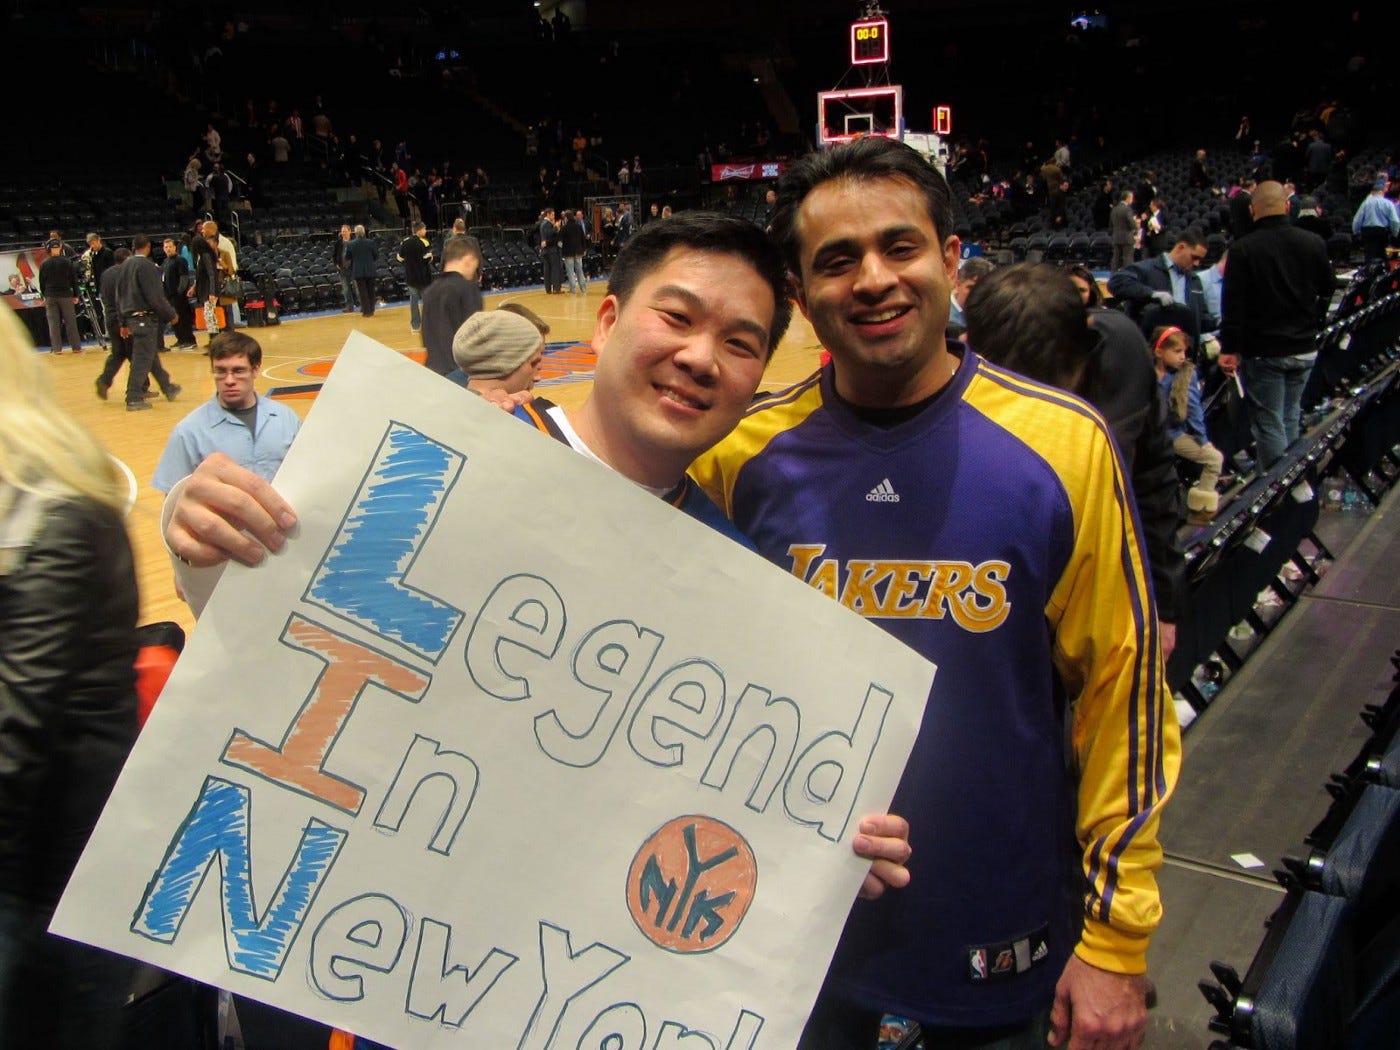 Adidas Authentic Jeremy Lin Linsanity New York Knicks Jersey Kobe